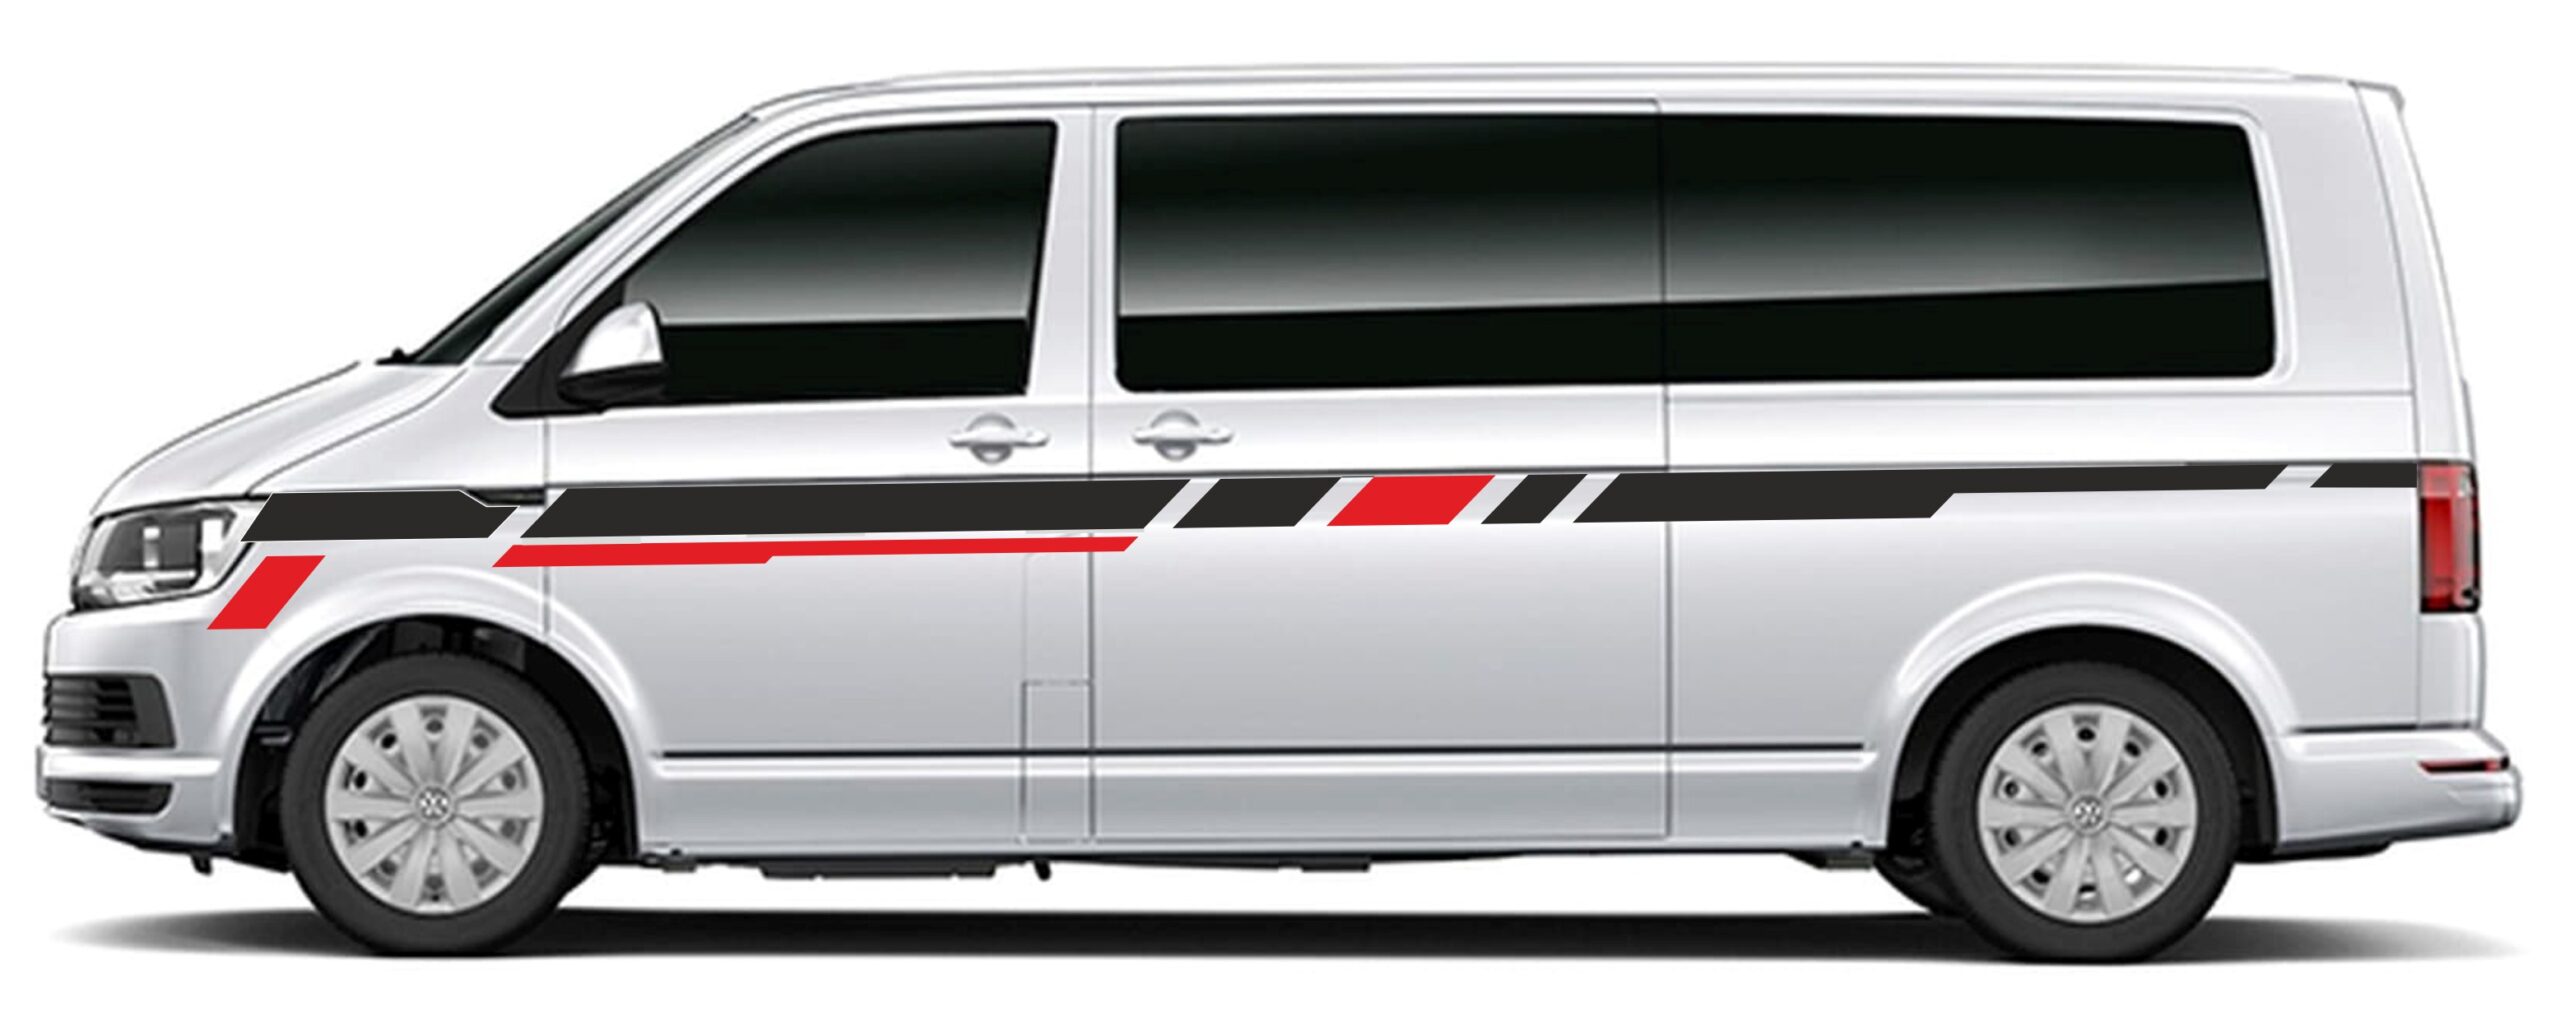 Naklejki VW T5 T6 Transporter pasy na boki long naklejki decals stripes sticker aufkleber nalepky samolepky tuning